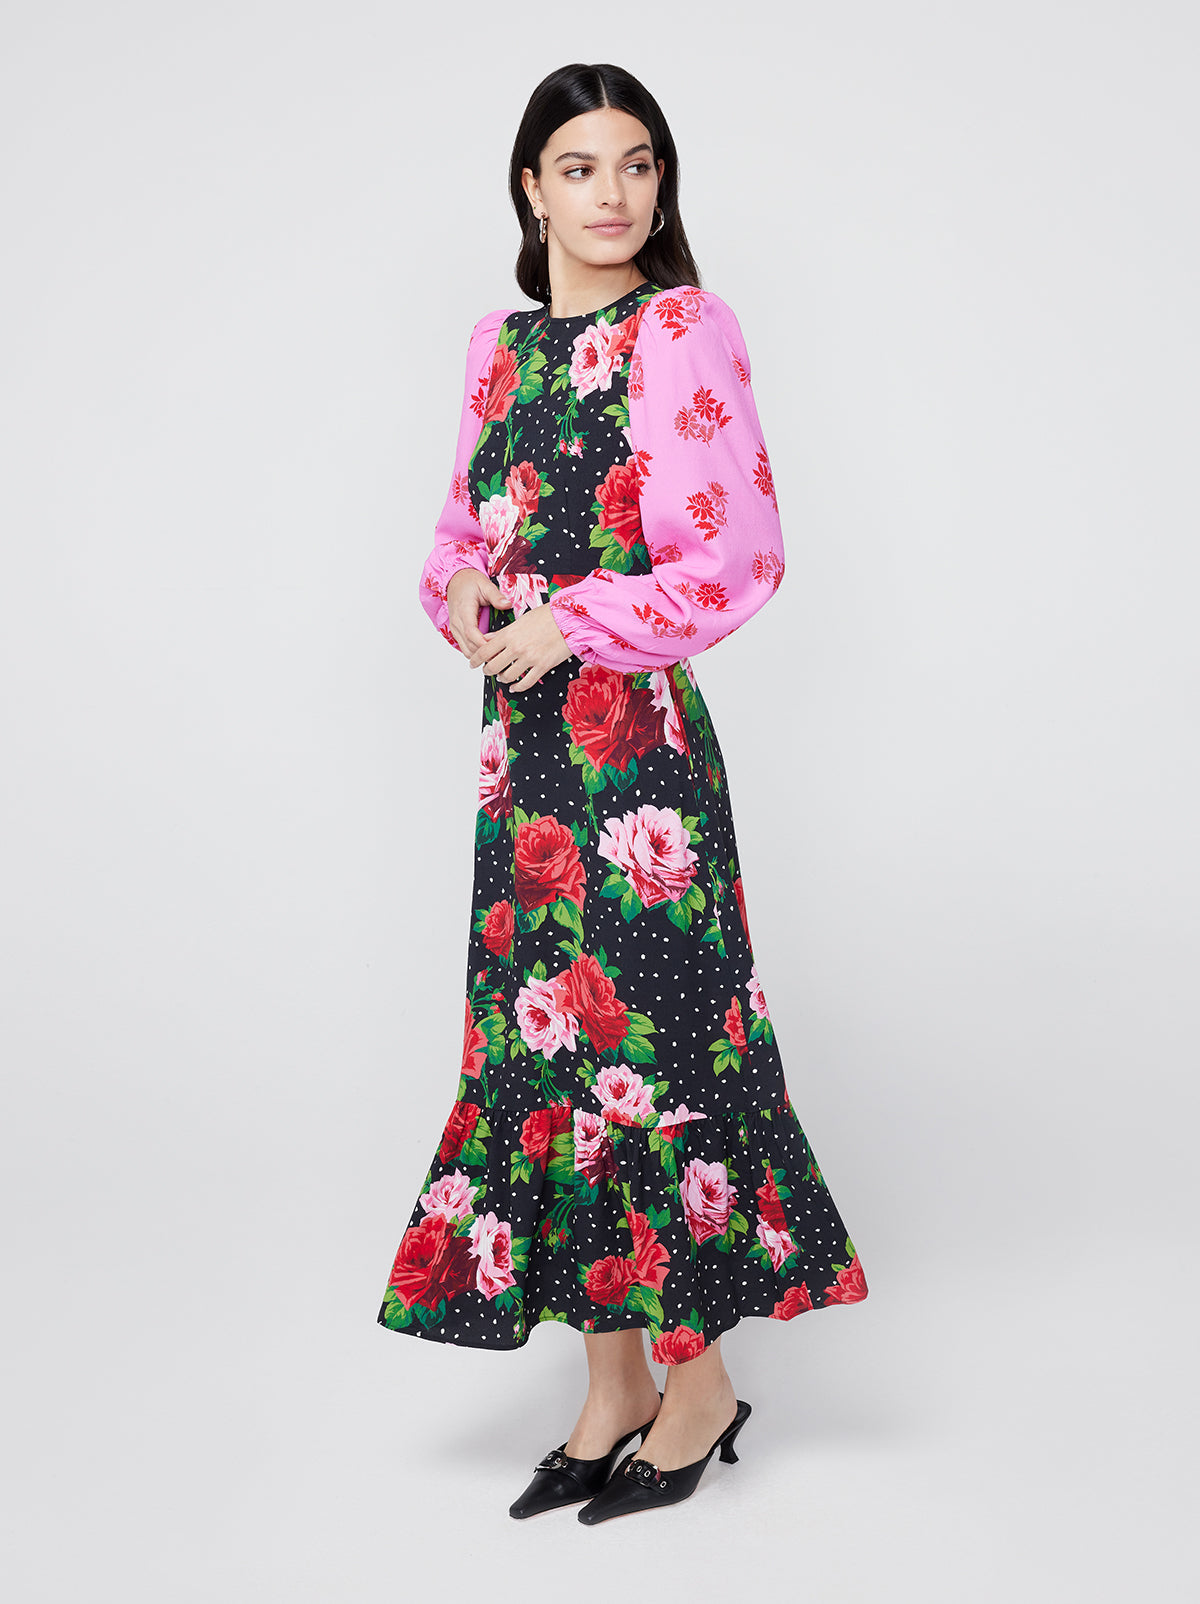 Samara Rose Mixed Print Midi Dress By KITRI Studio